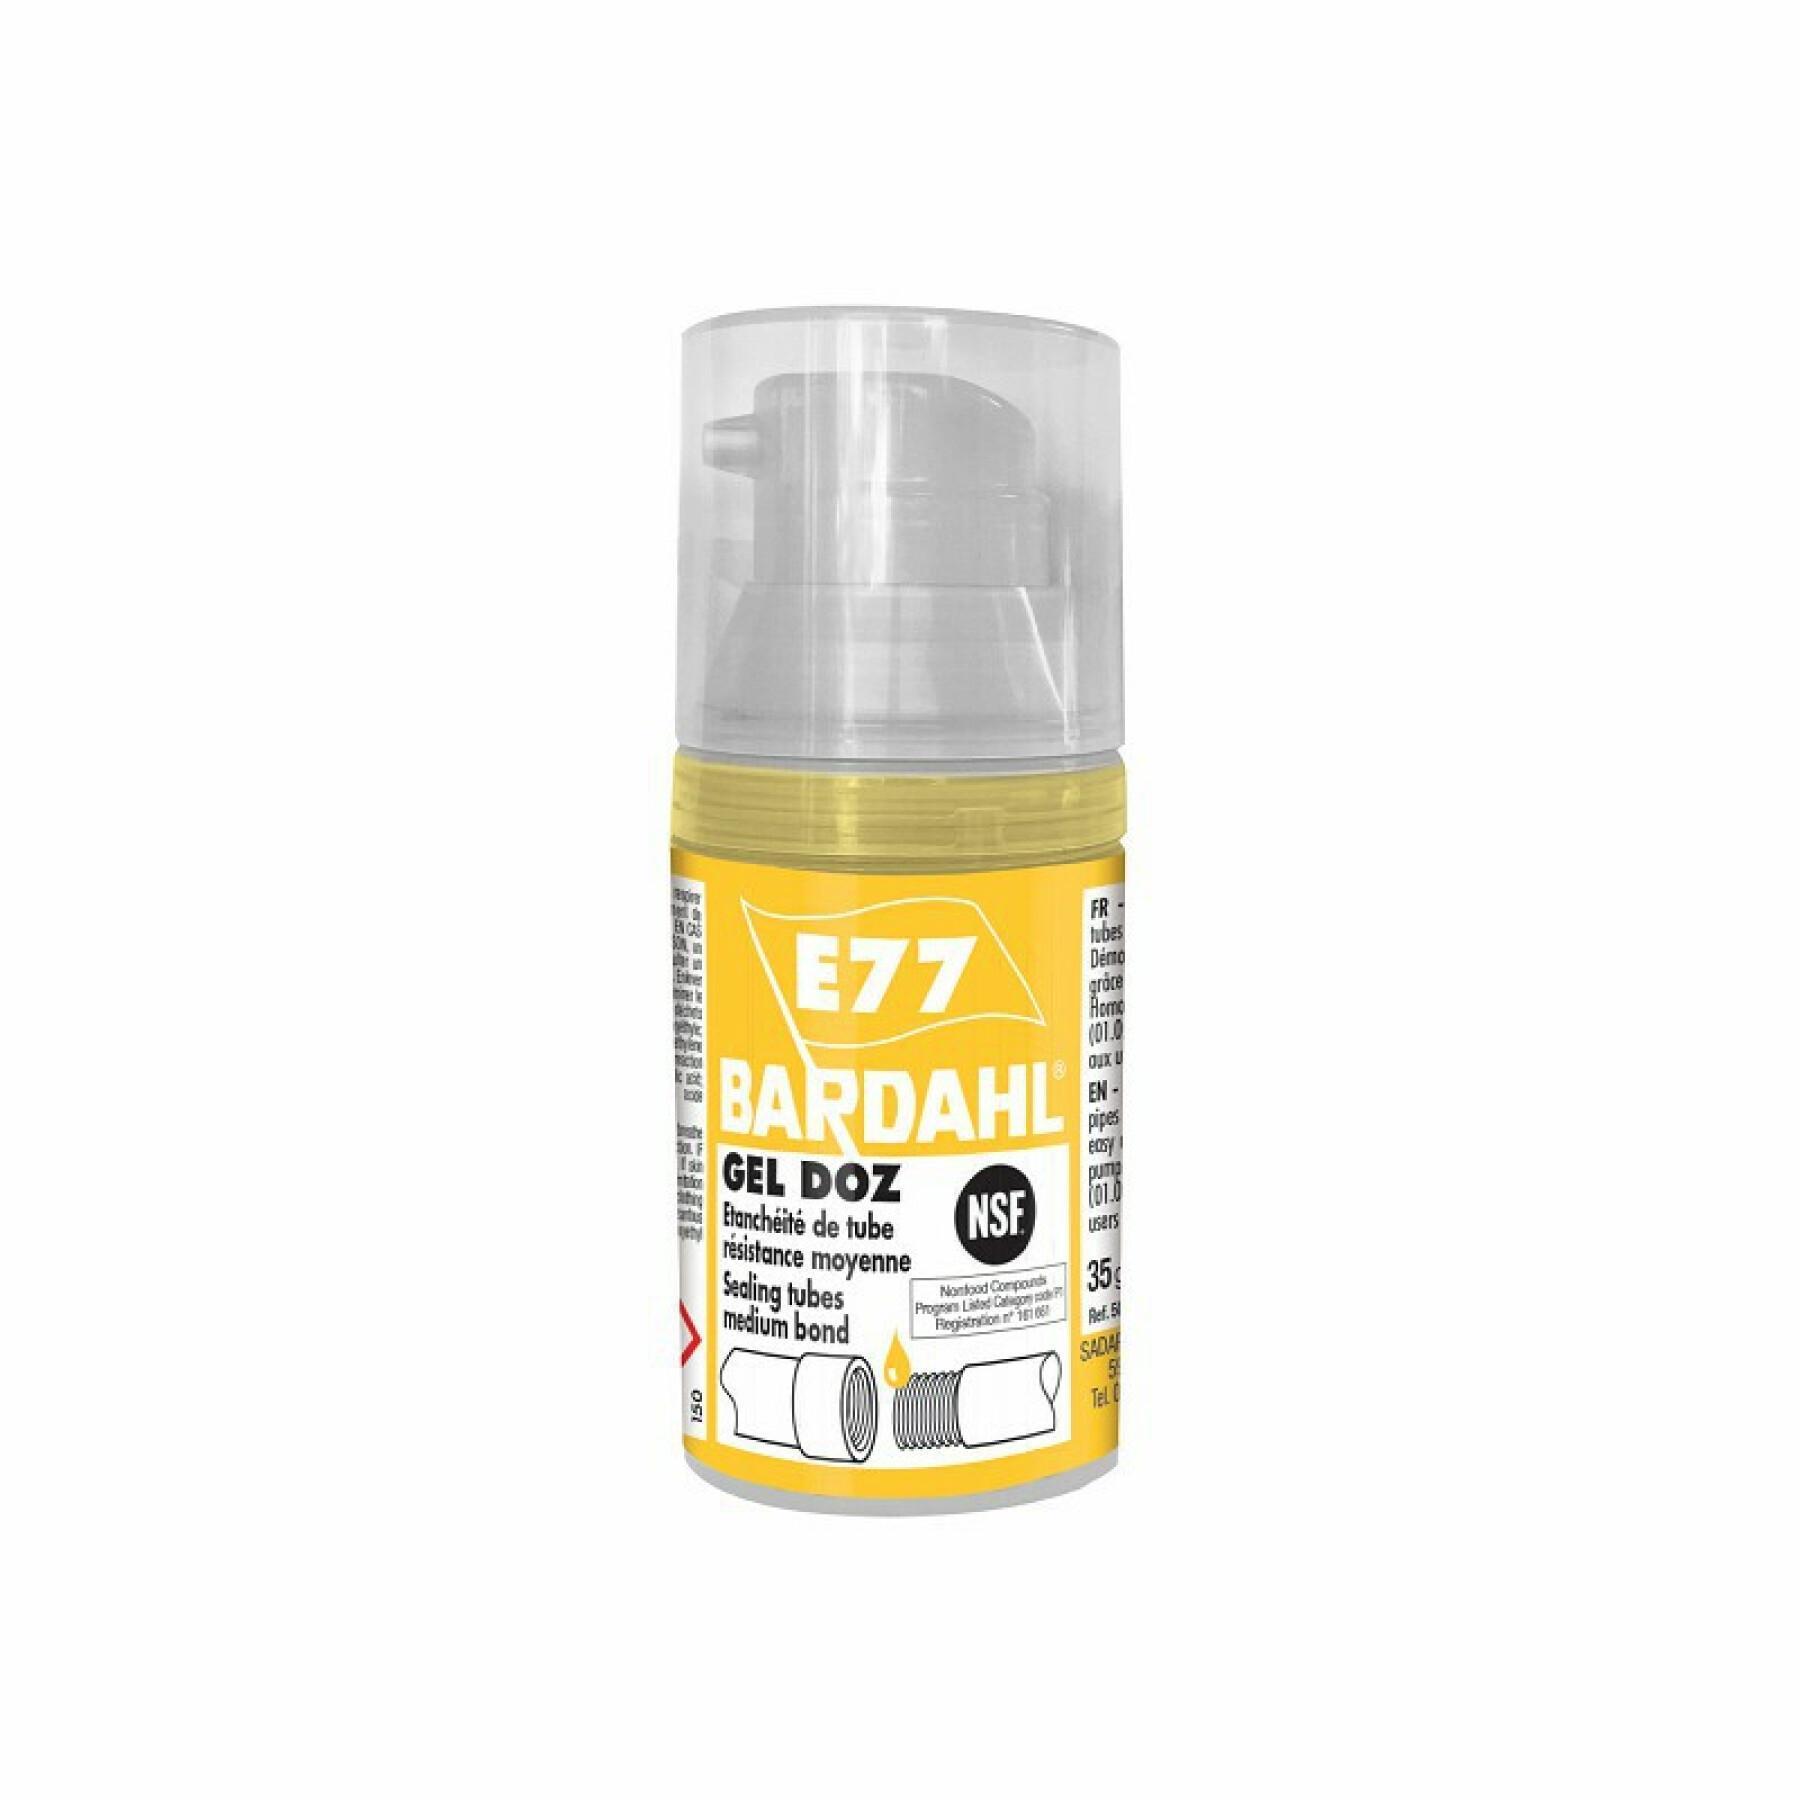 Adhesive fixed cylinder waterproof pump tube resistant Bardahl Geldoz E77 35 g